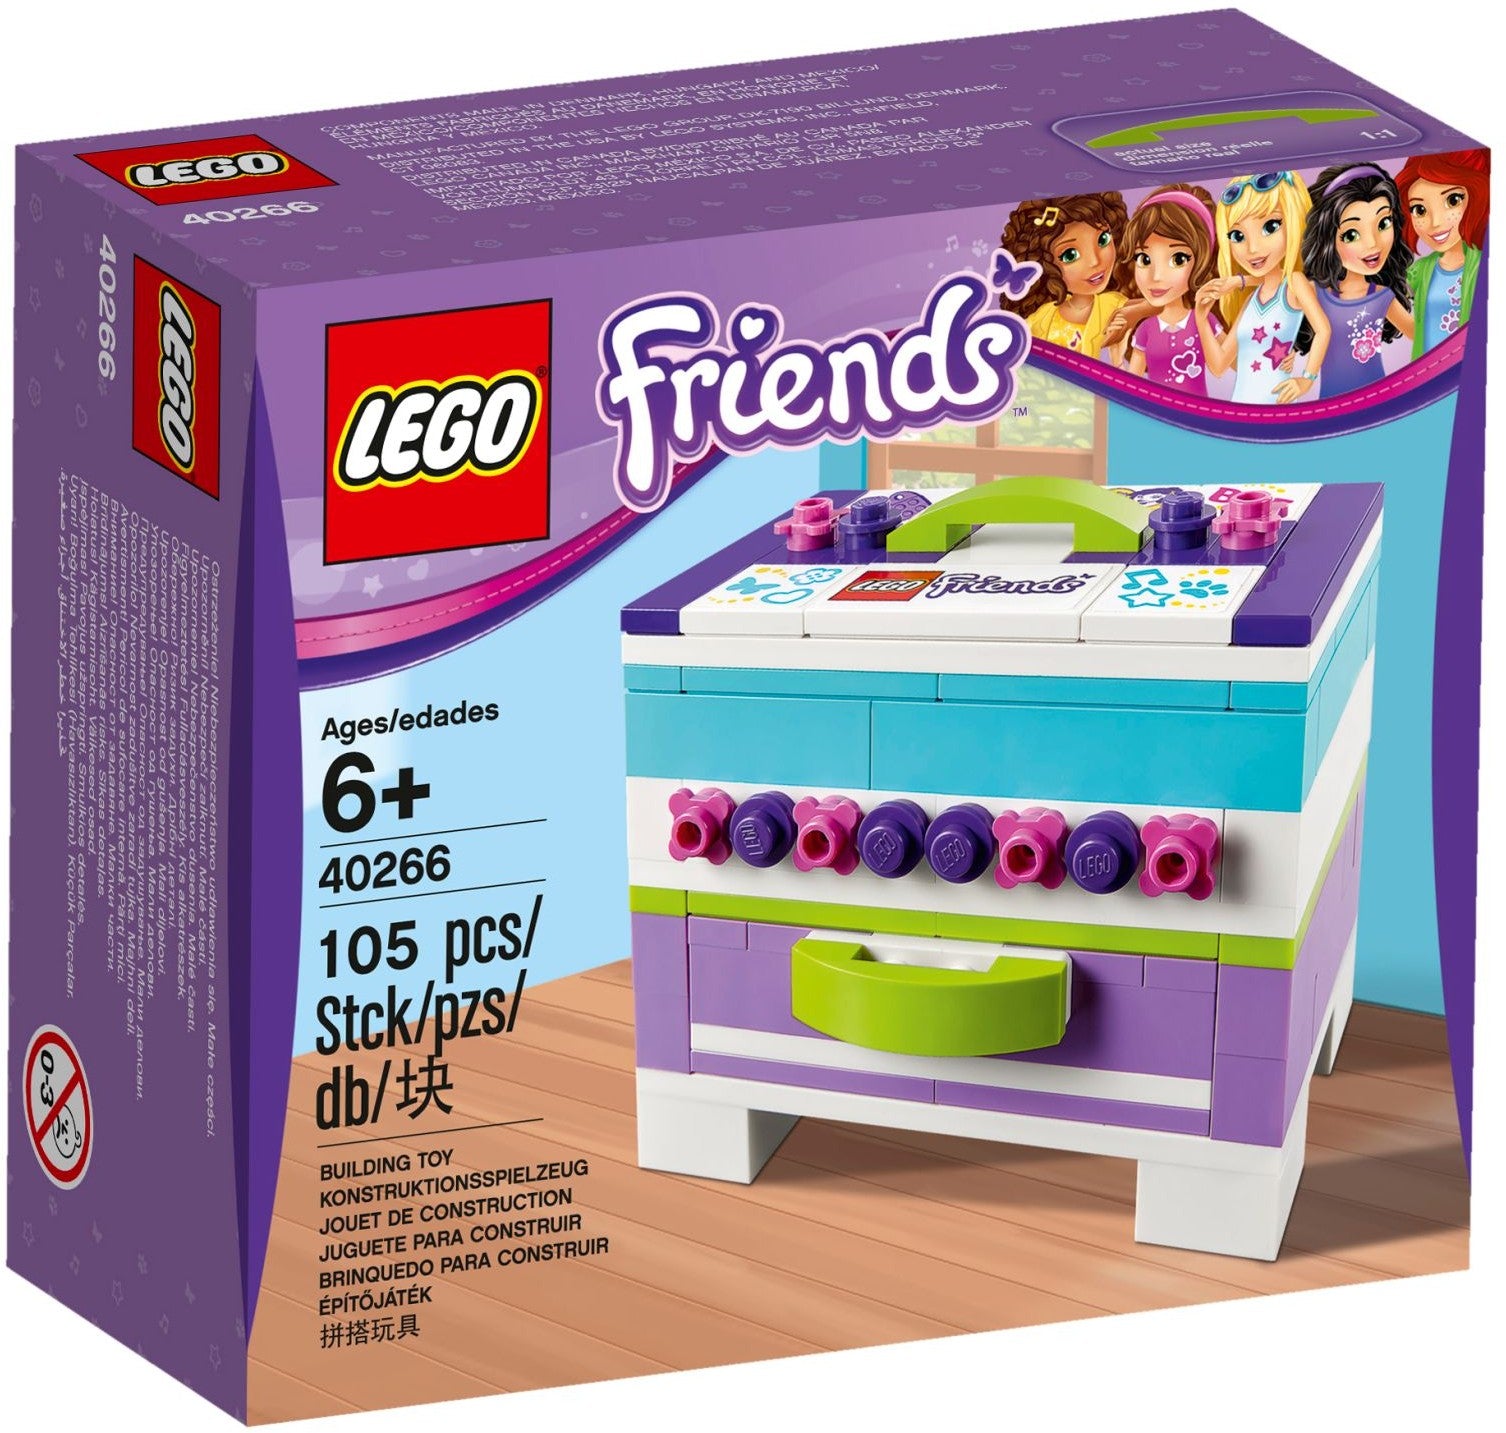 LEGO® Friends Keepsake Box (105 pieces) – AESOP'S FABLE